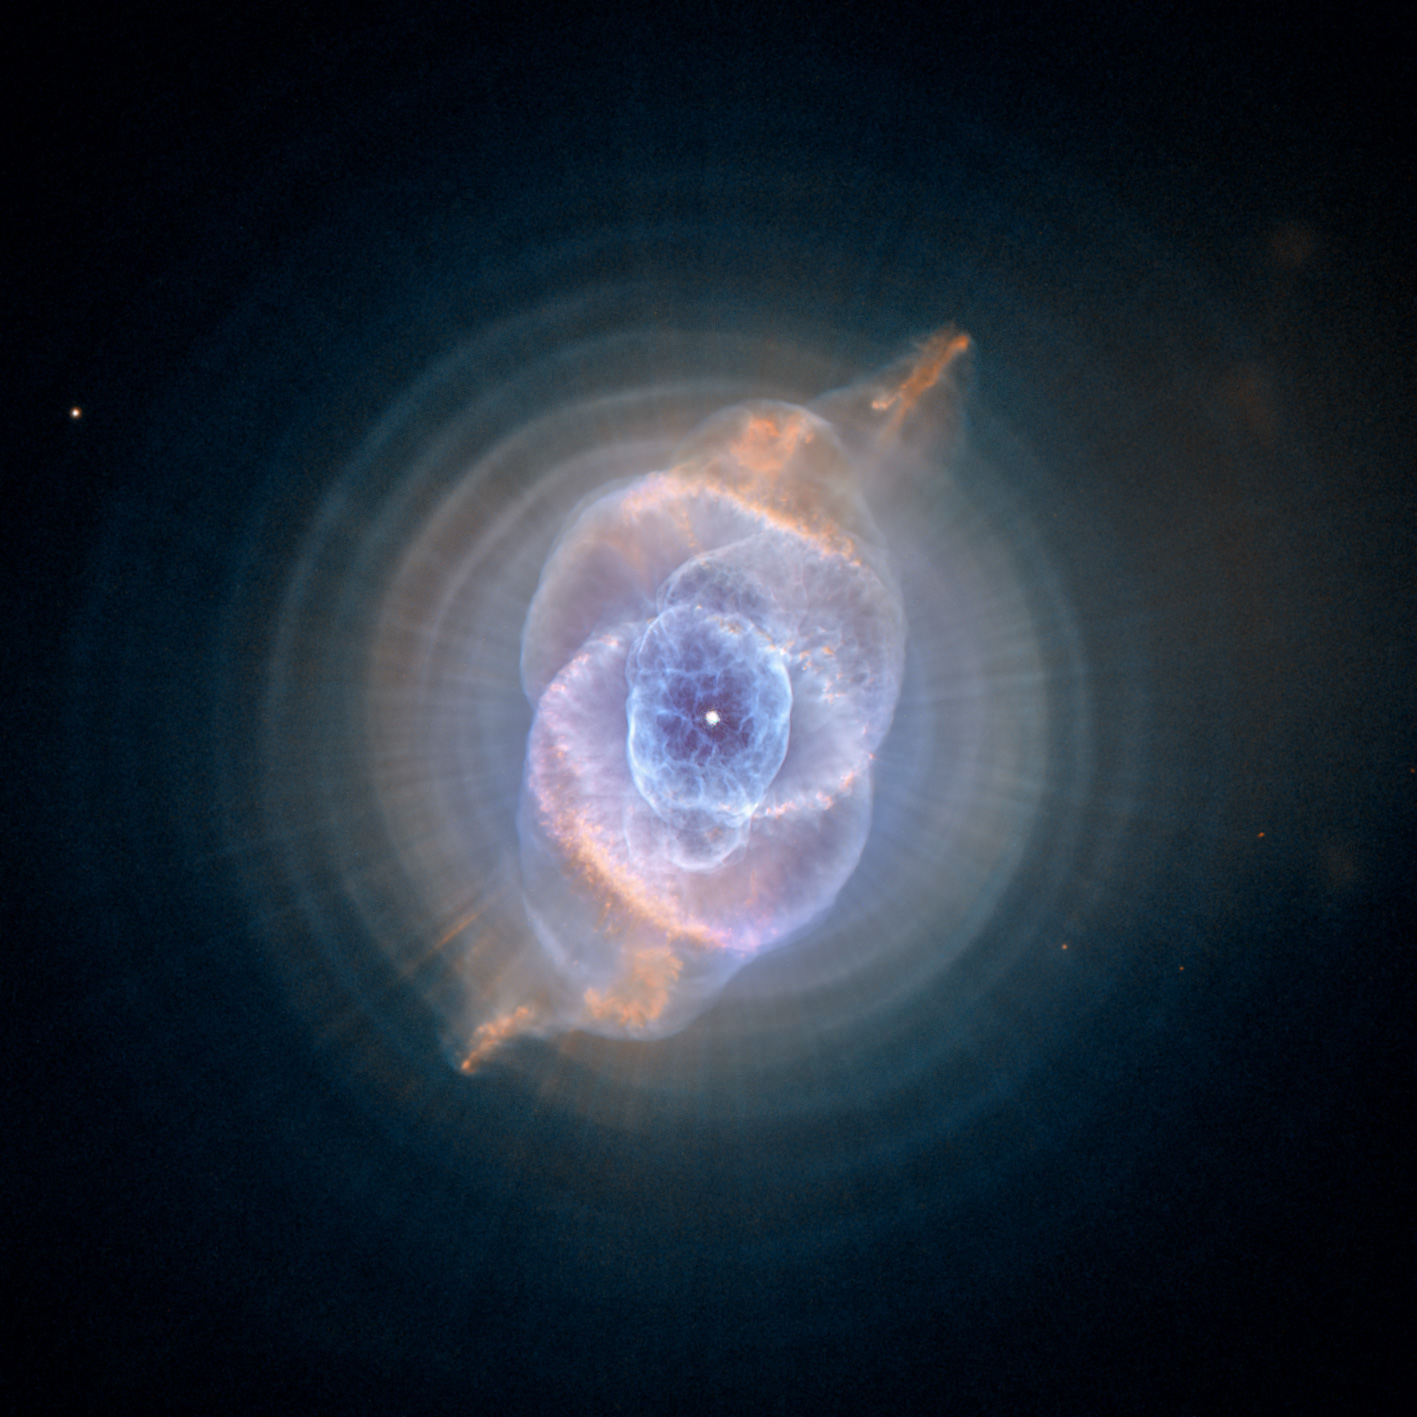 Dying Star by NASA/ESA Hubble Telescope